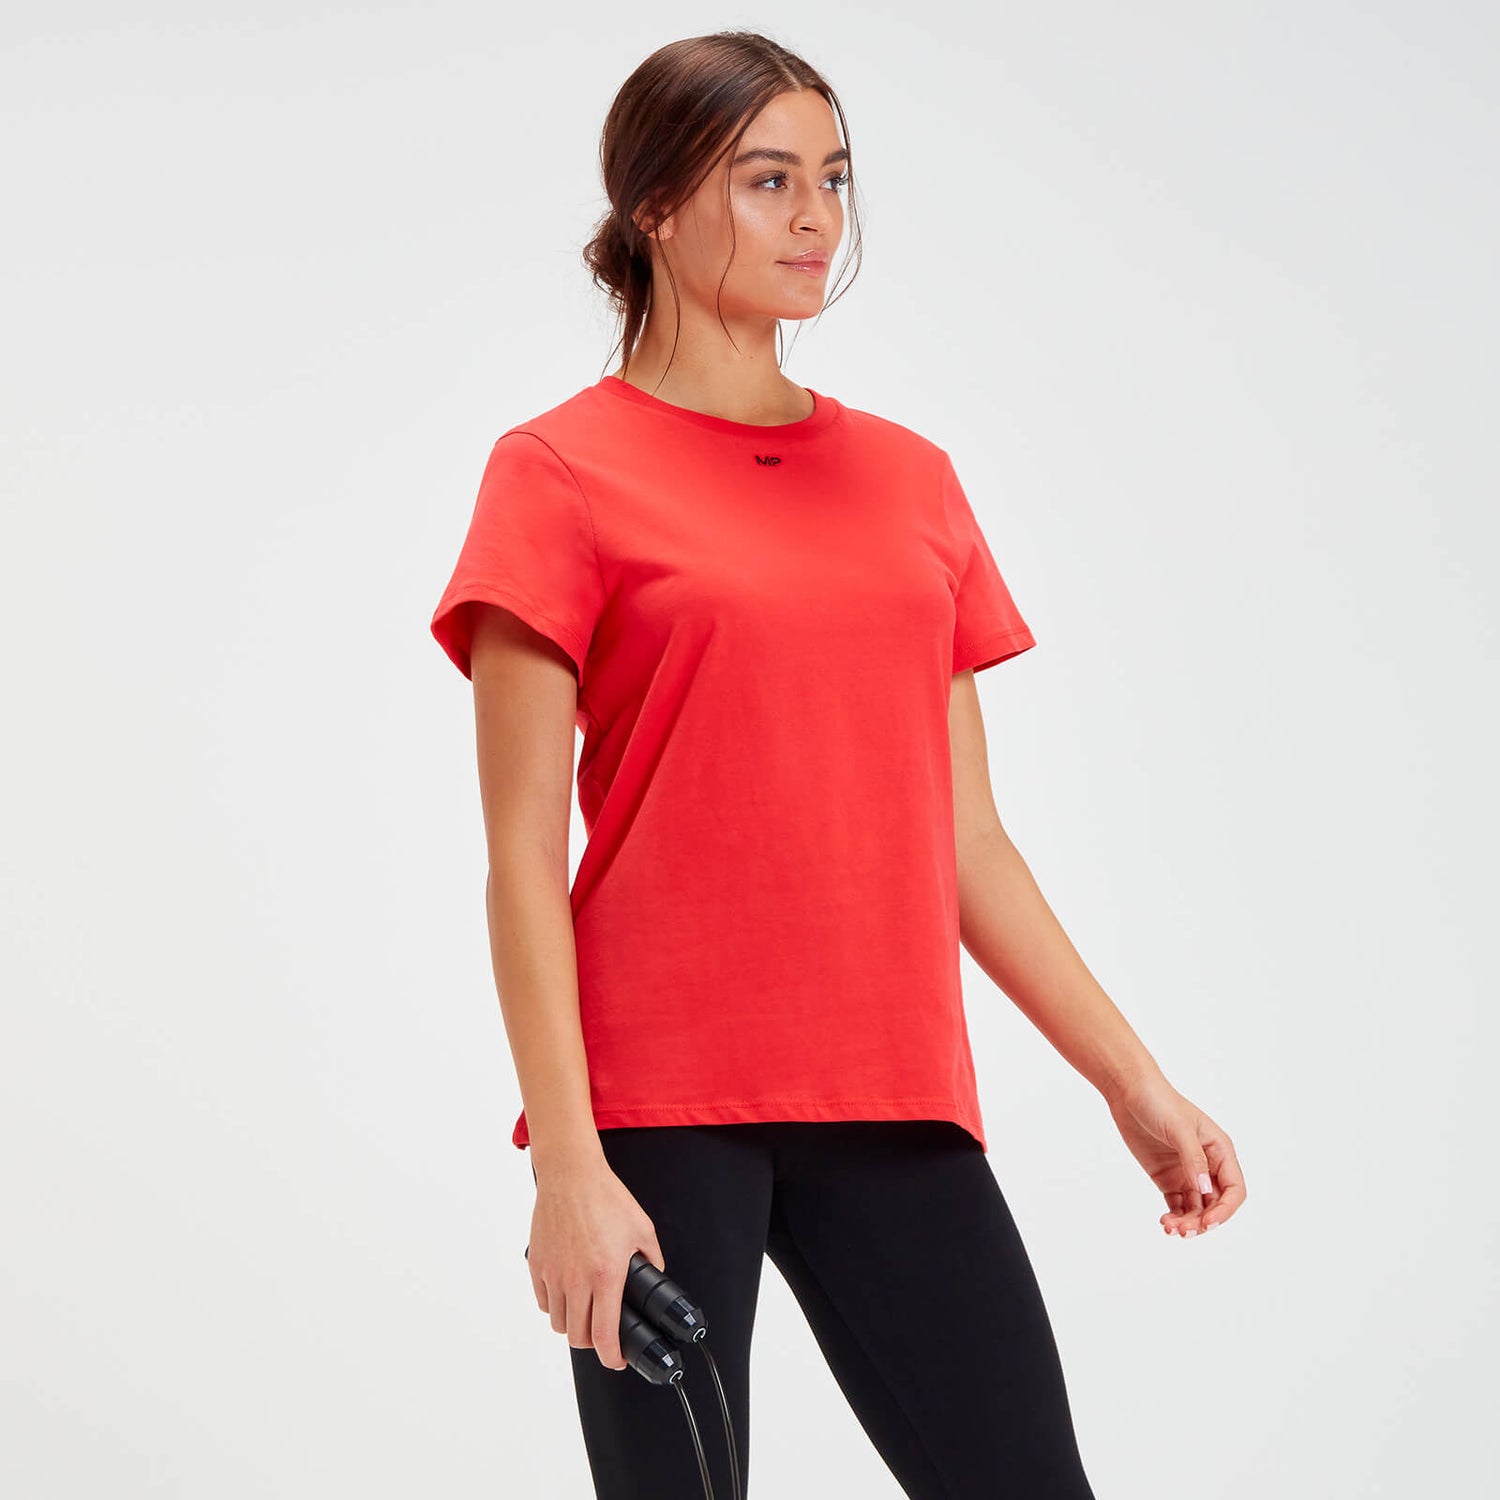 MP ženska Essentials majica - jarko crvena - XS